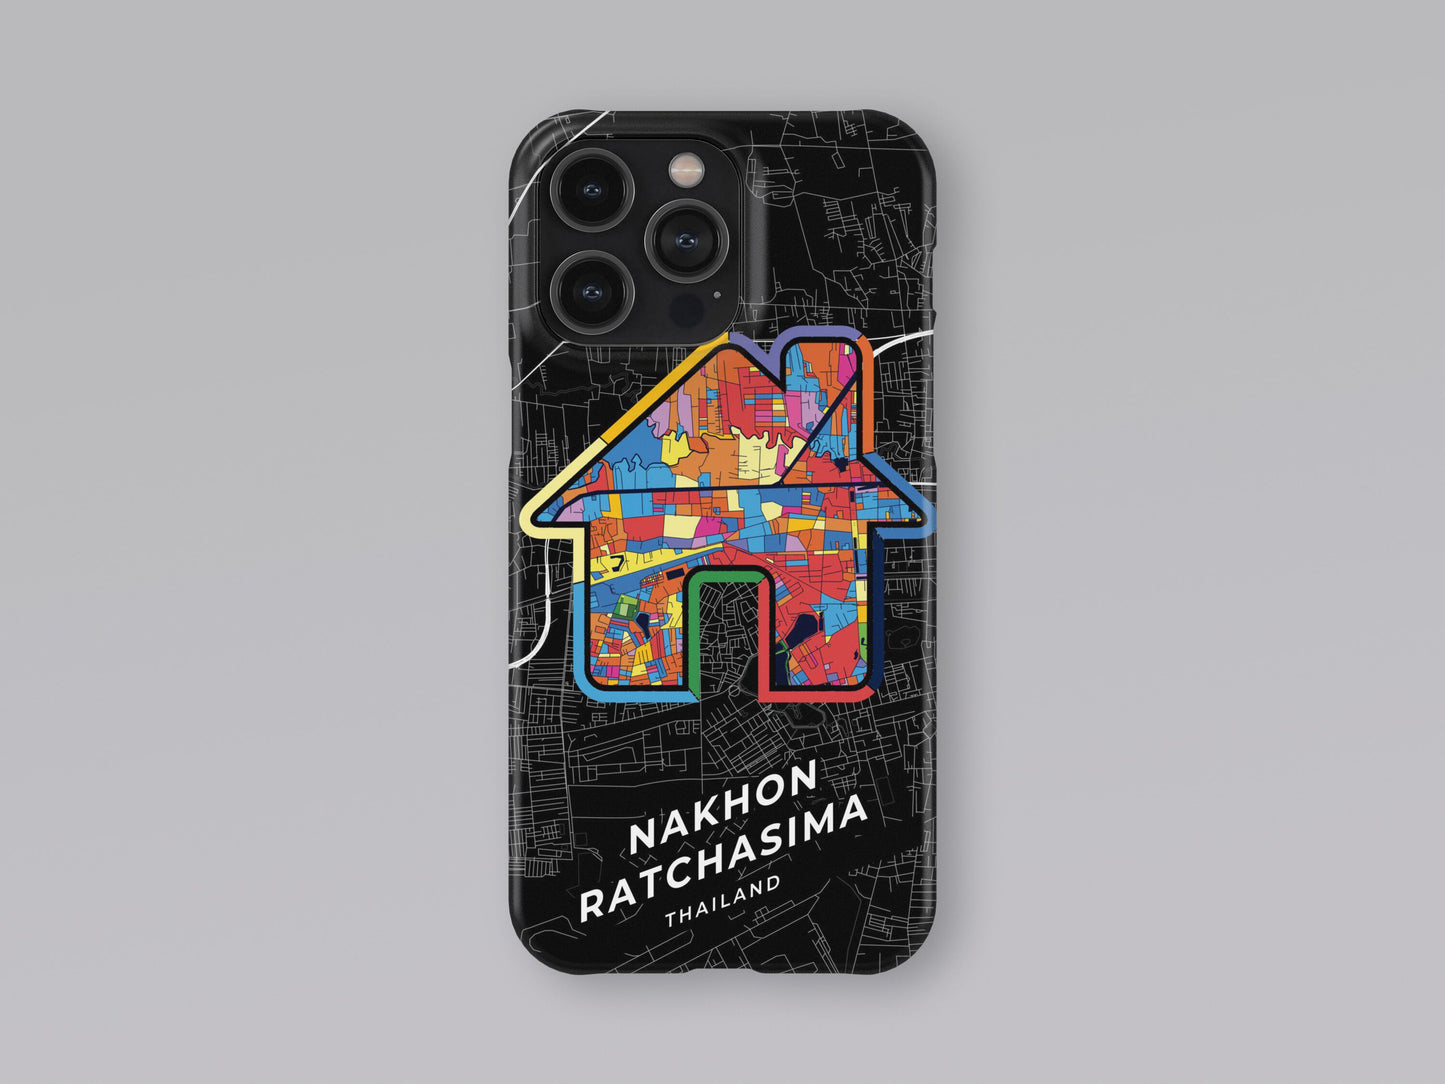 Nakhon Ratchasima Thailand slim phone case with colorful icon 3